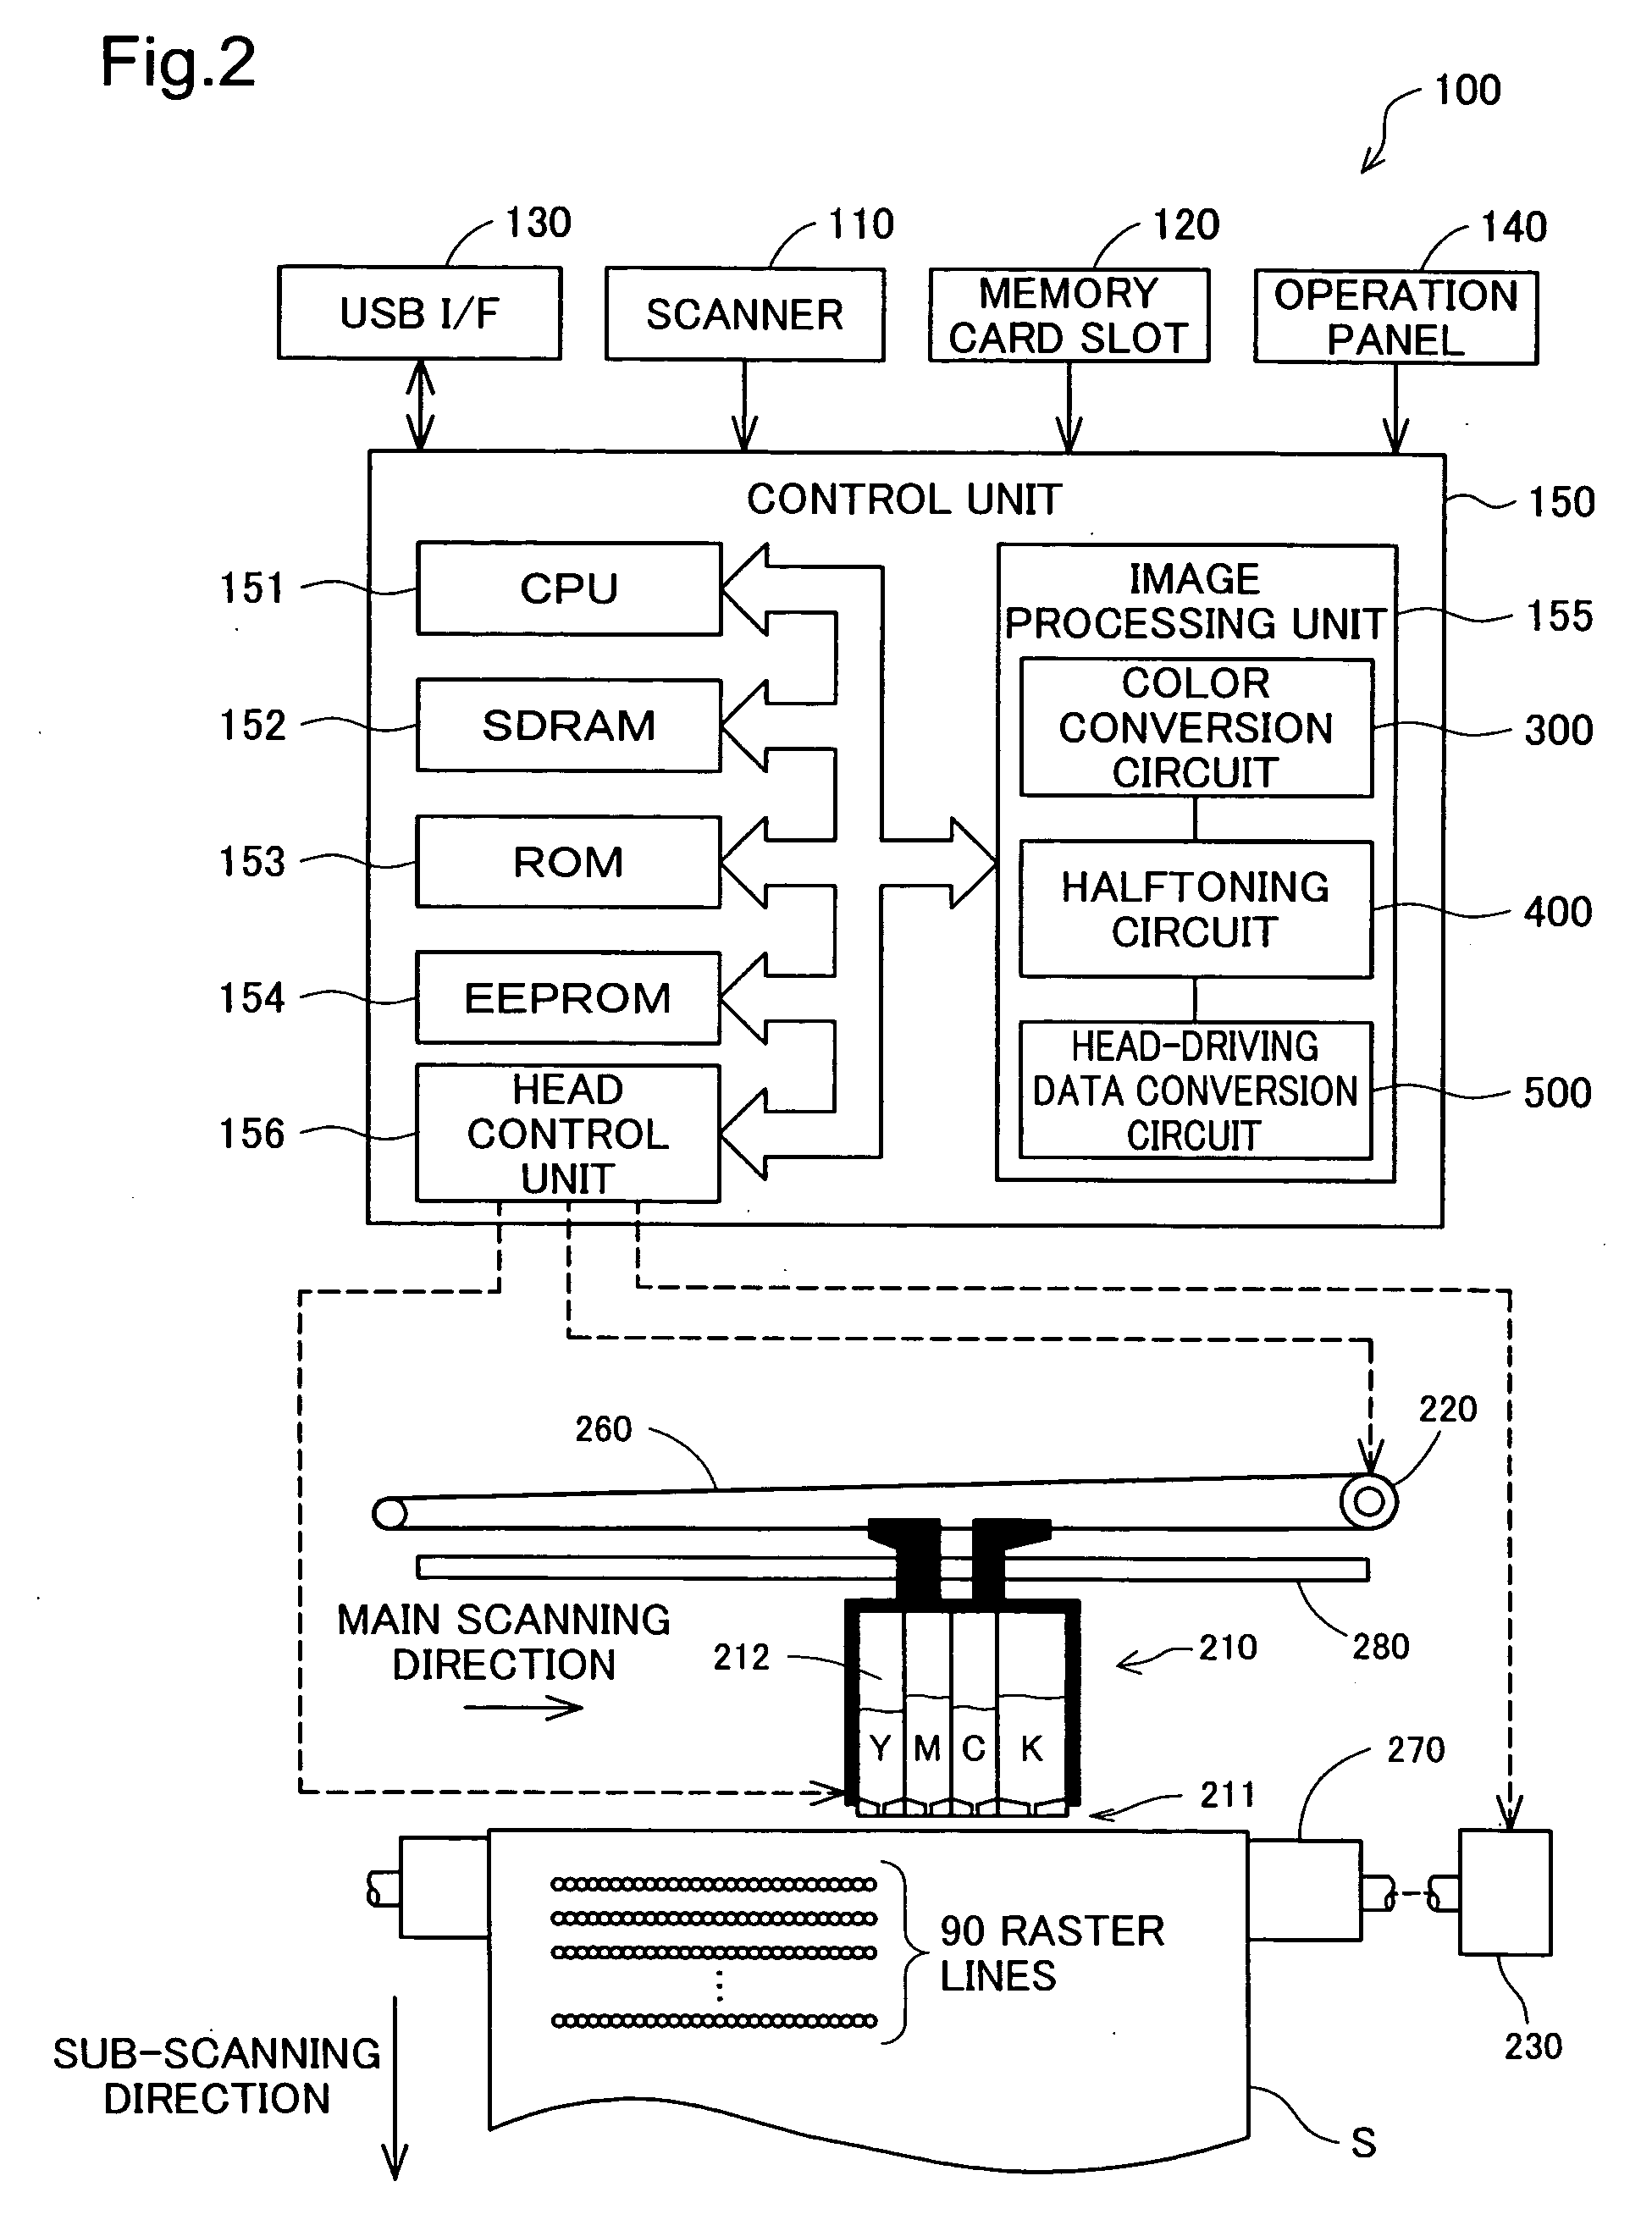 Image output apparatus